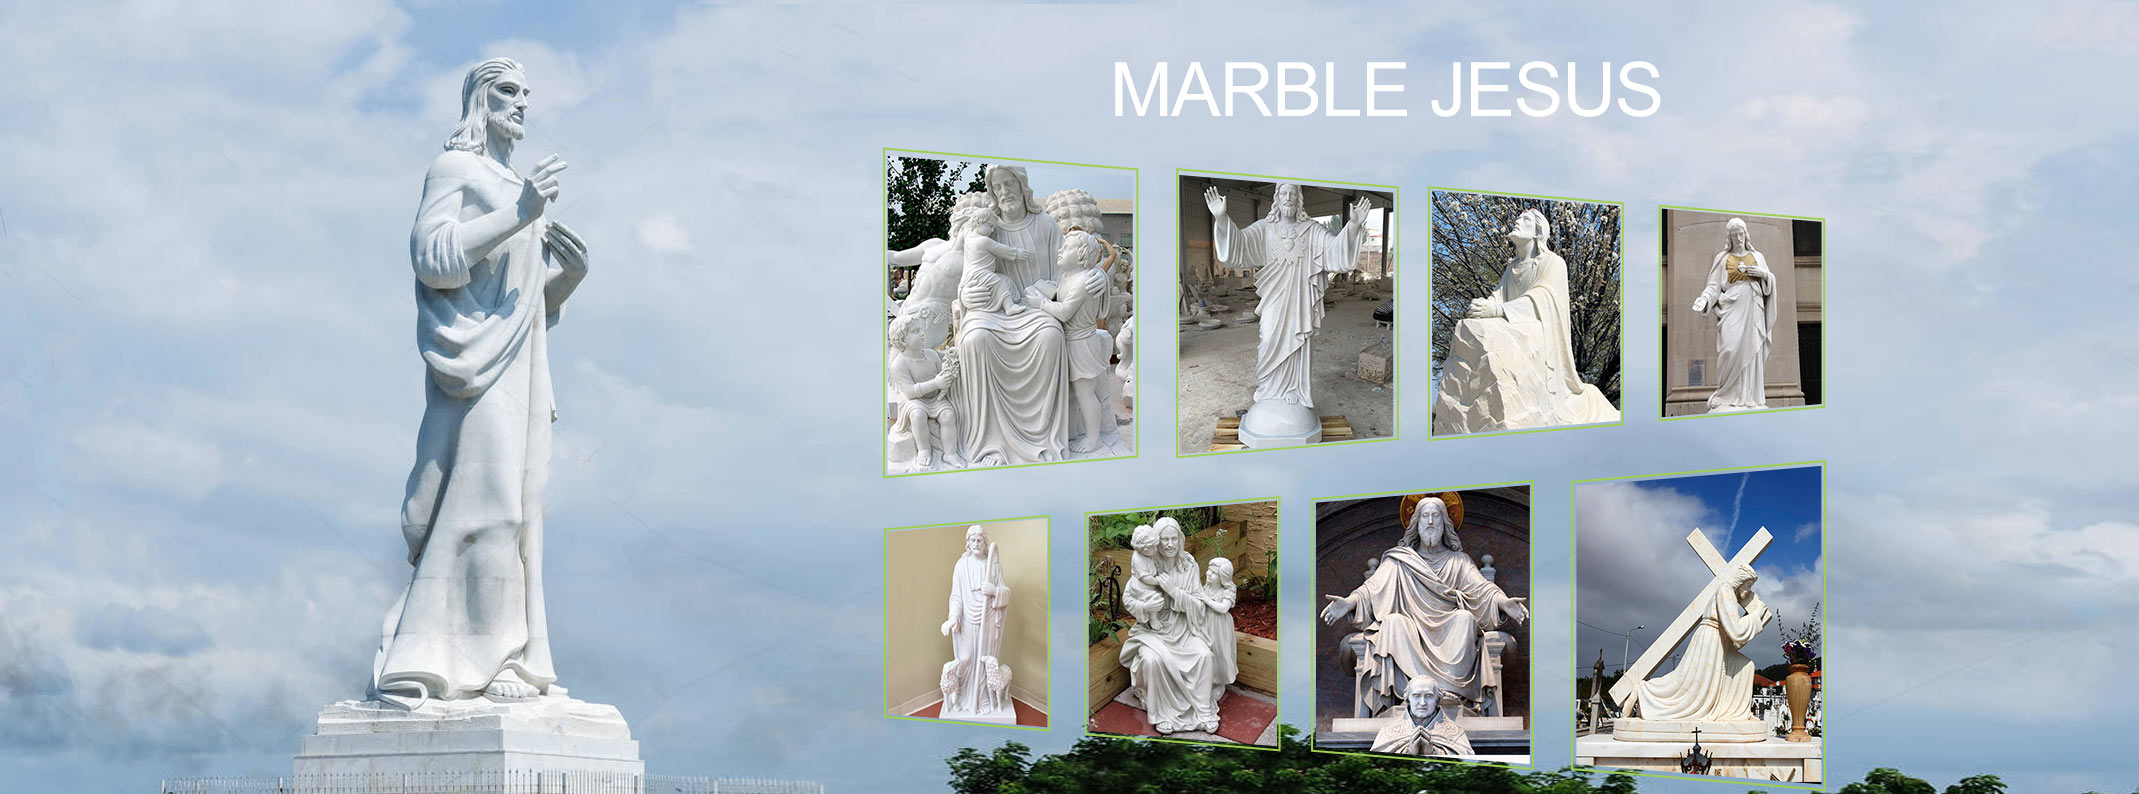 marble jesus statue Handmade carving 